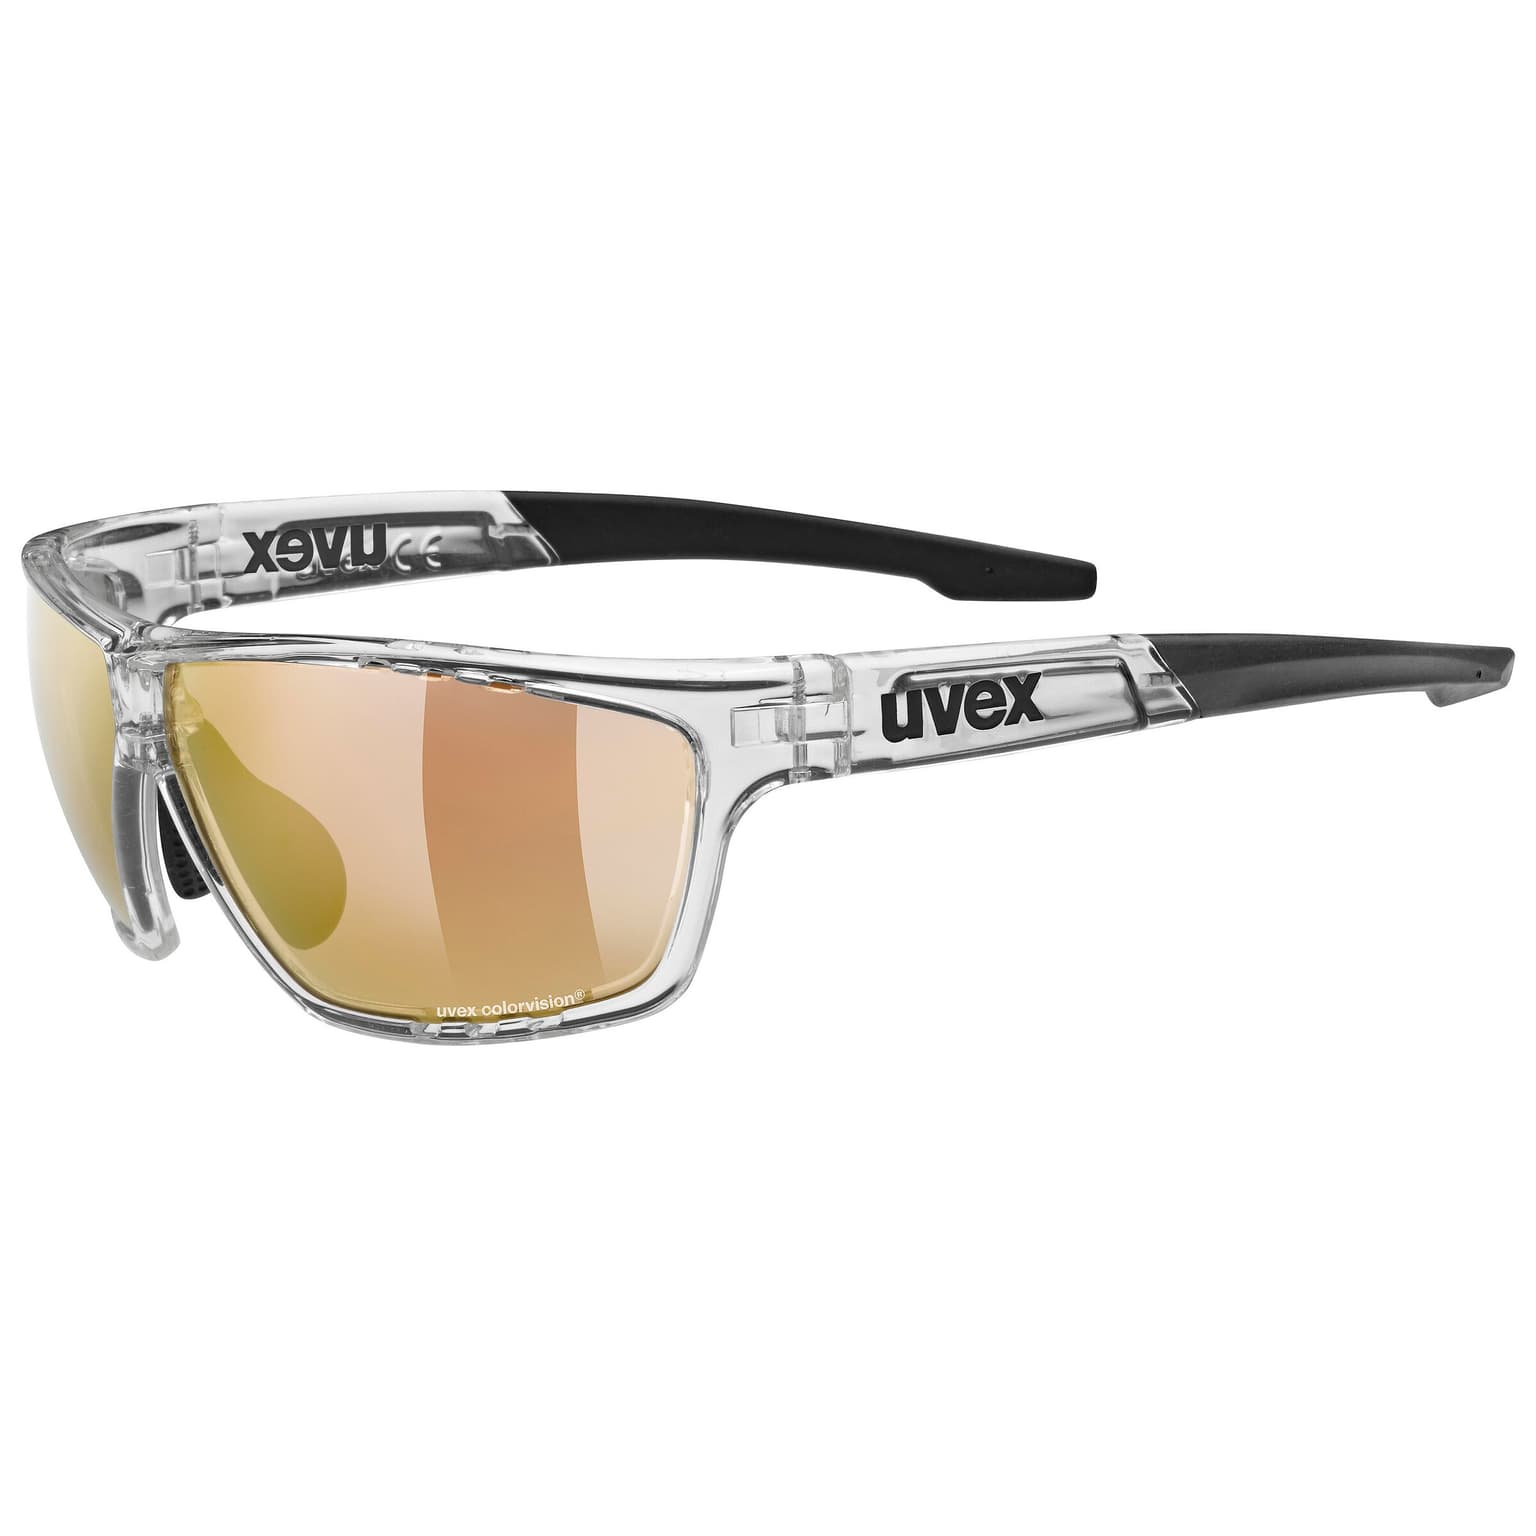 Uvex Uvex Colorvision Sportbrille silberfarben 1